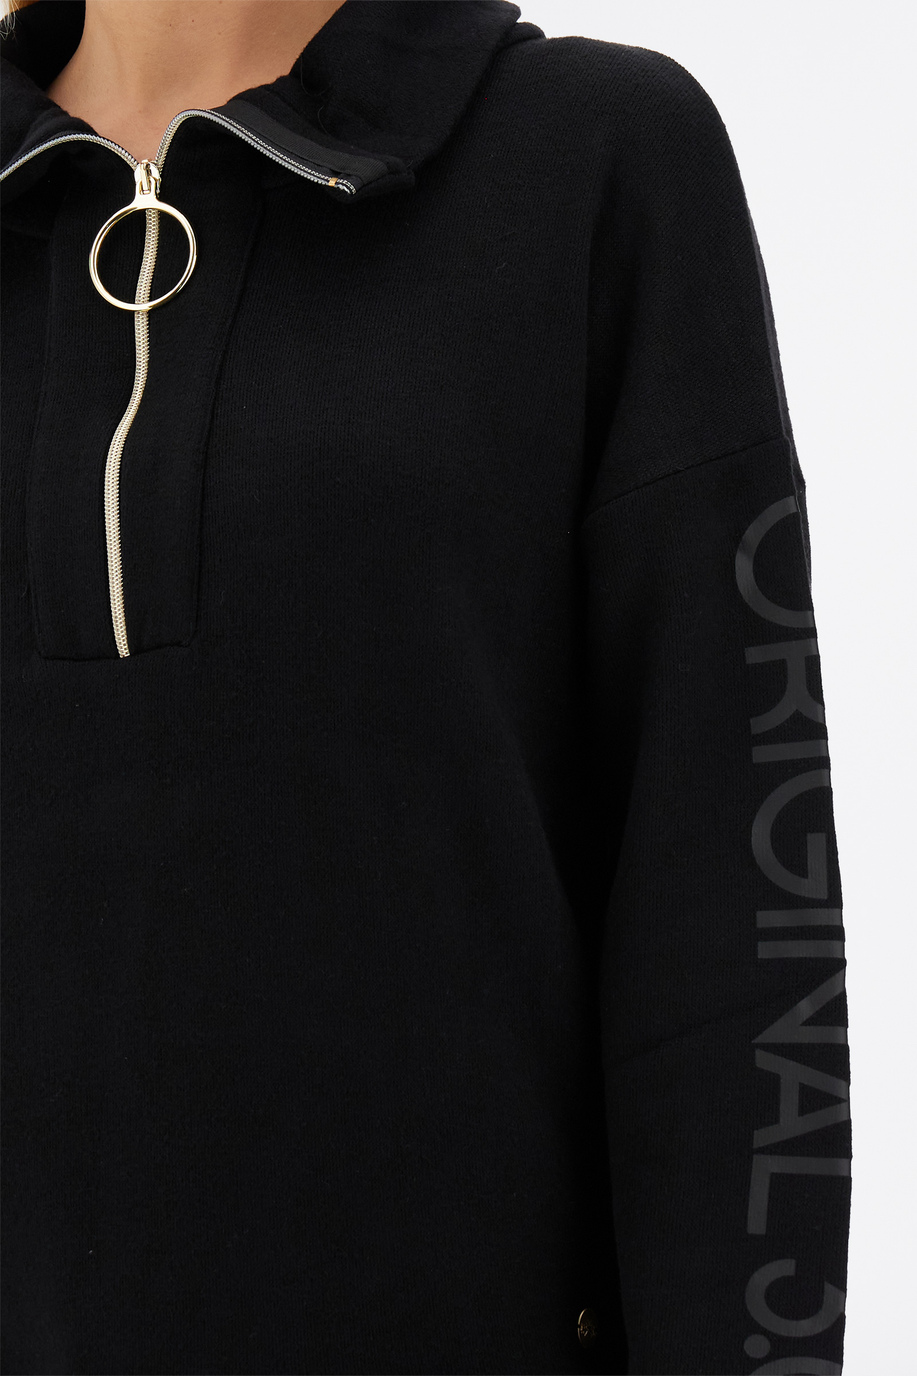 Damen-Sweatshirt Jet Set aus Mischgewebe mit halbem Reißverschluss - Neuankömmlinge Frauen | La Martina - Official Online Shop